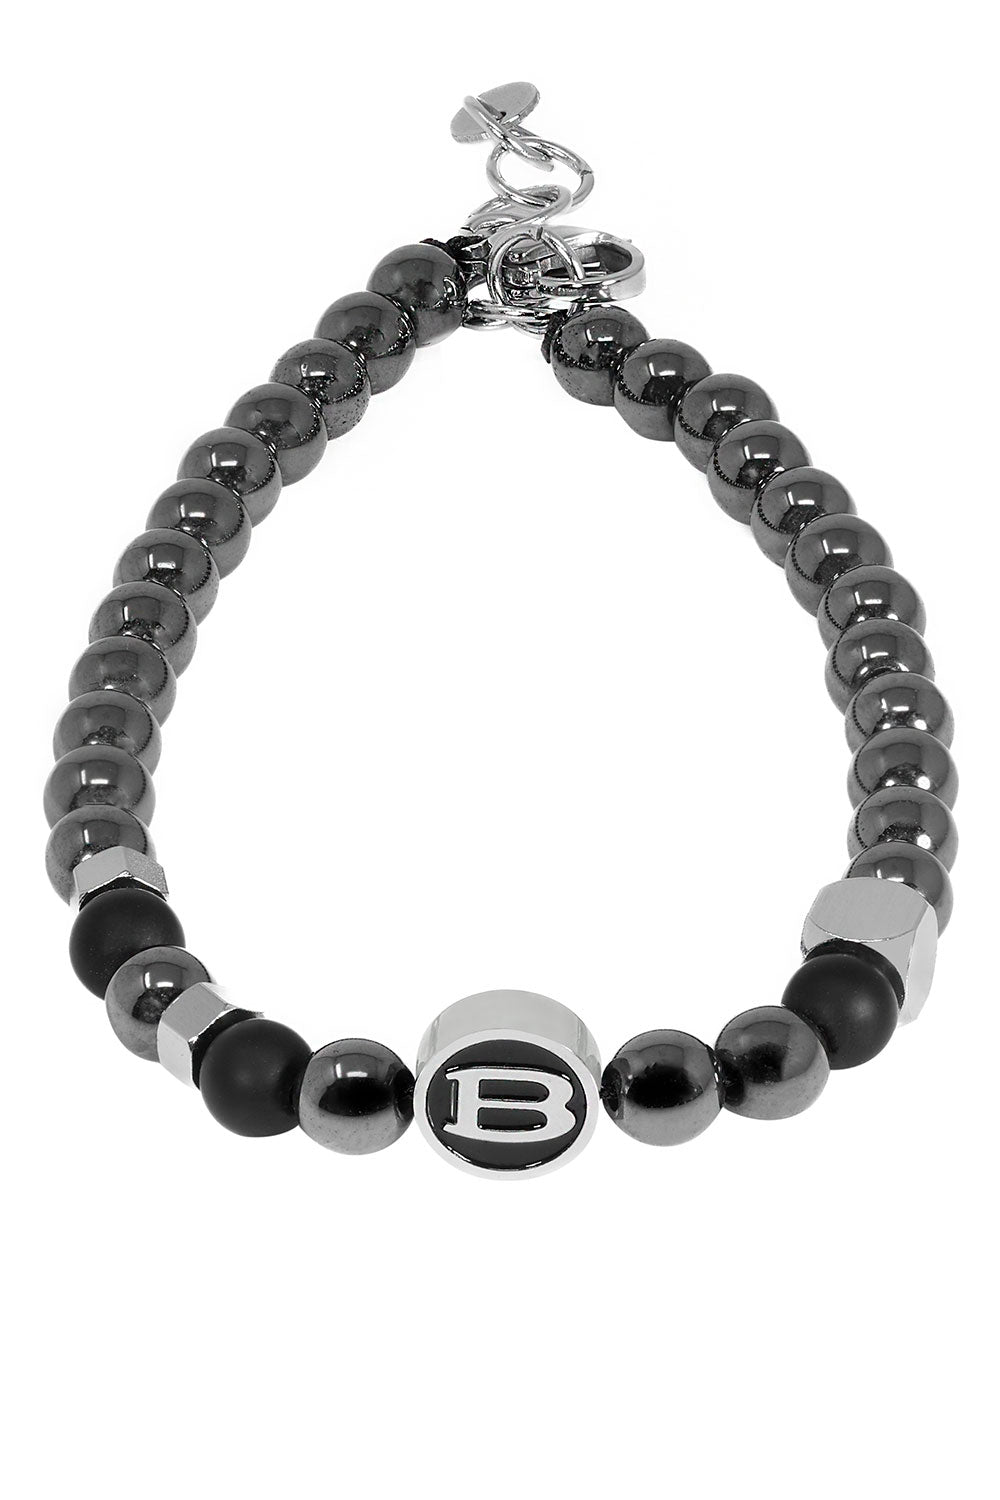 Barabas Unisex Obsidian Healing Bangles Bracelets 4BB07 Black